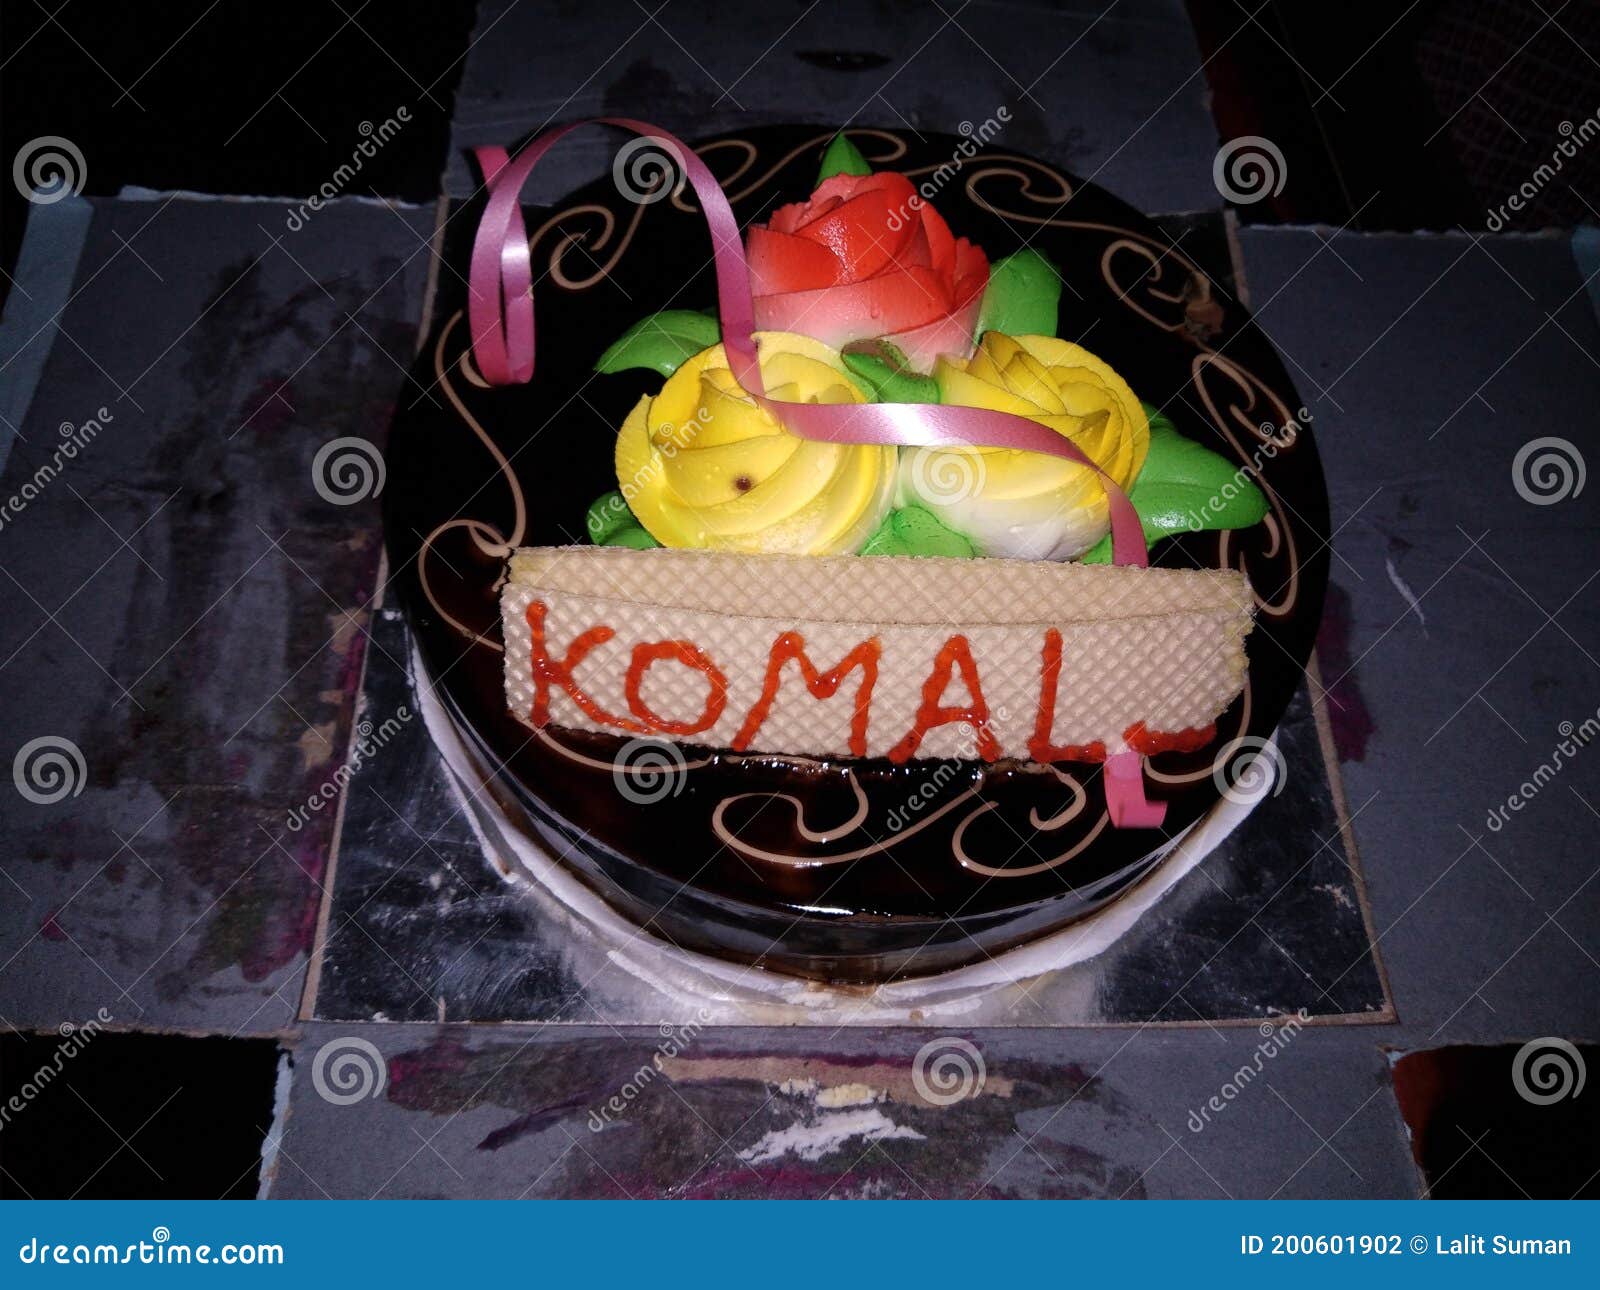 Komal Name Birthday Cake Image Stock Photo Image Of Cake Name